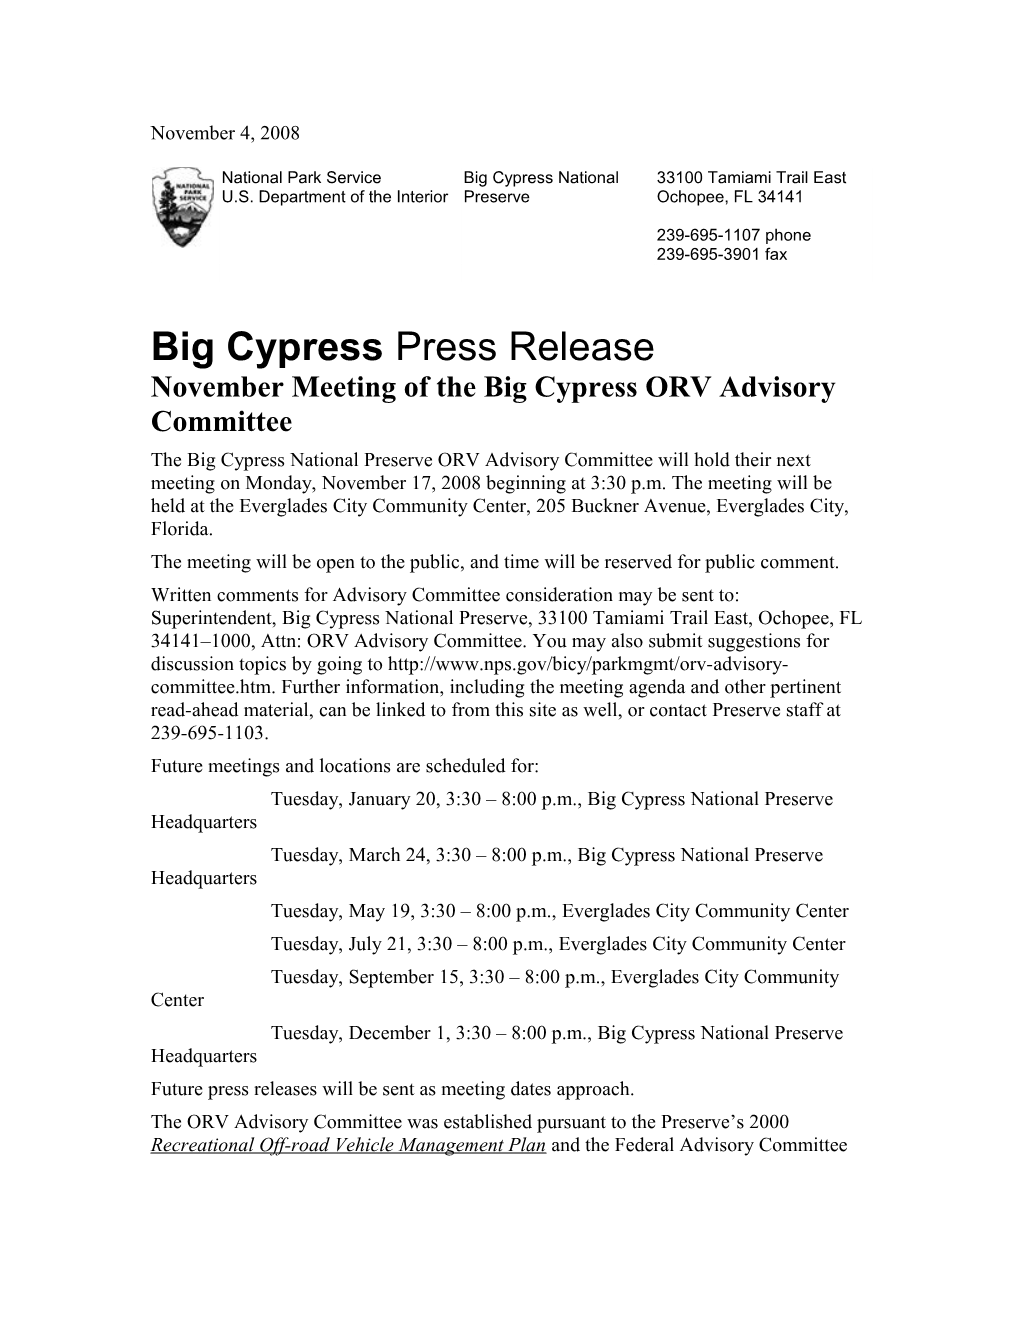 November Meeting of the Big Cypress ORV Advisory Committee